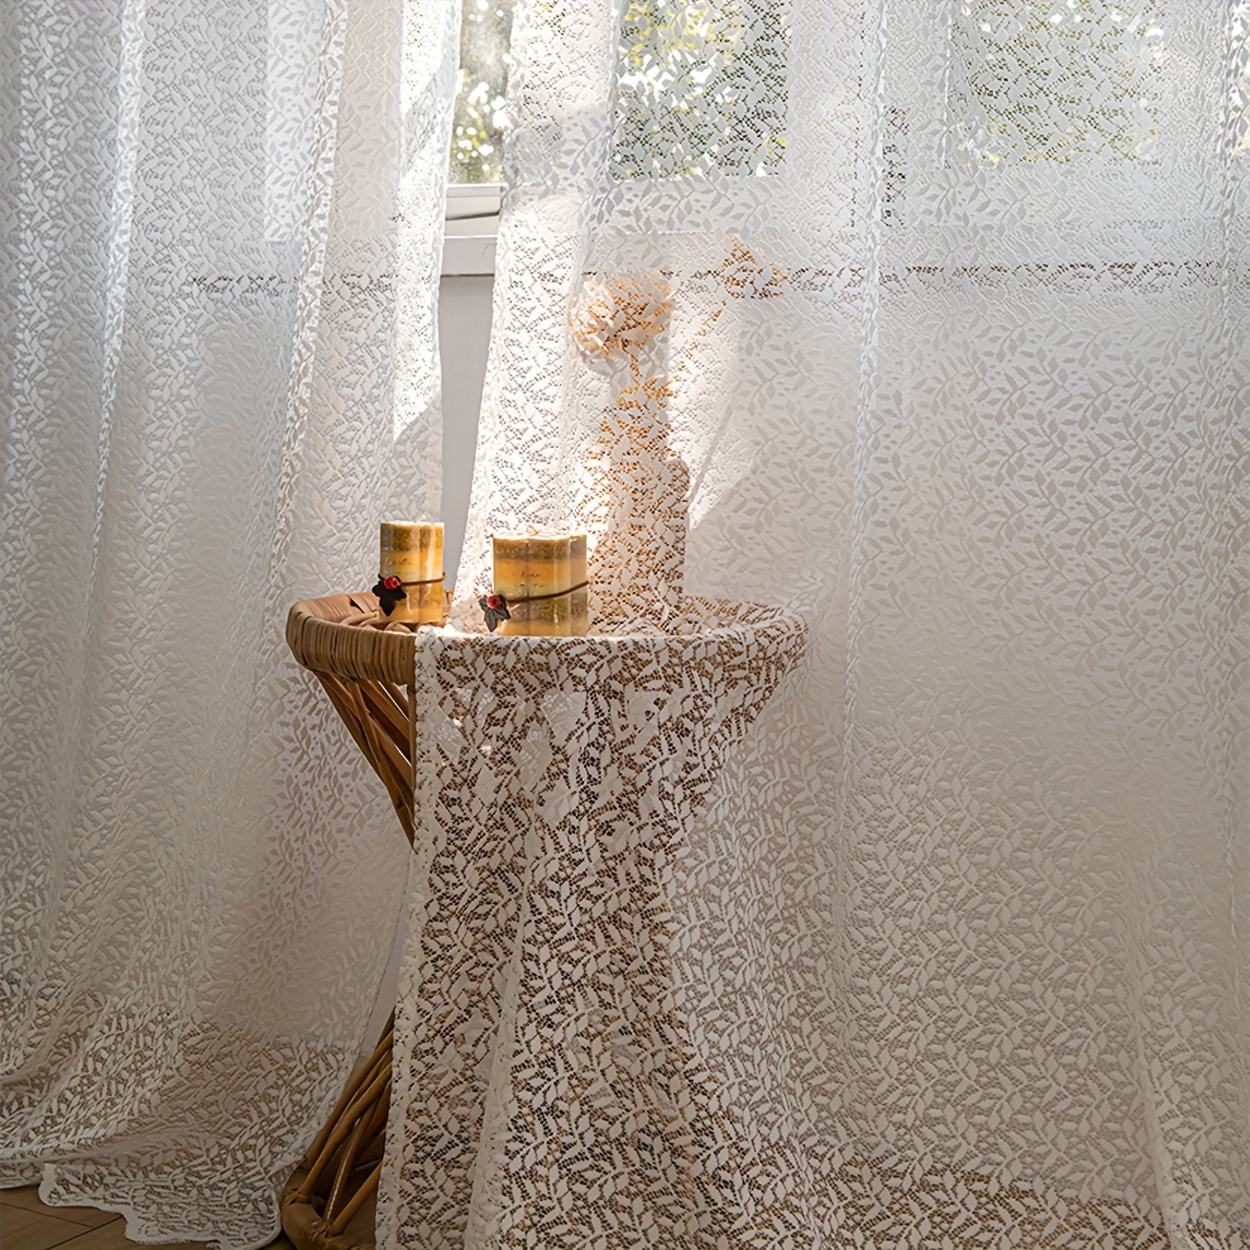 1pc white crochet boho curtain sheer lace handmade tassels knitted window treatment vintage rustic bohemian farmhouse curtain for bedroom rod pocket living room home decor